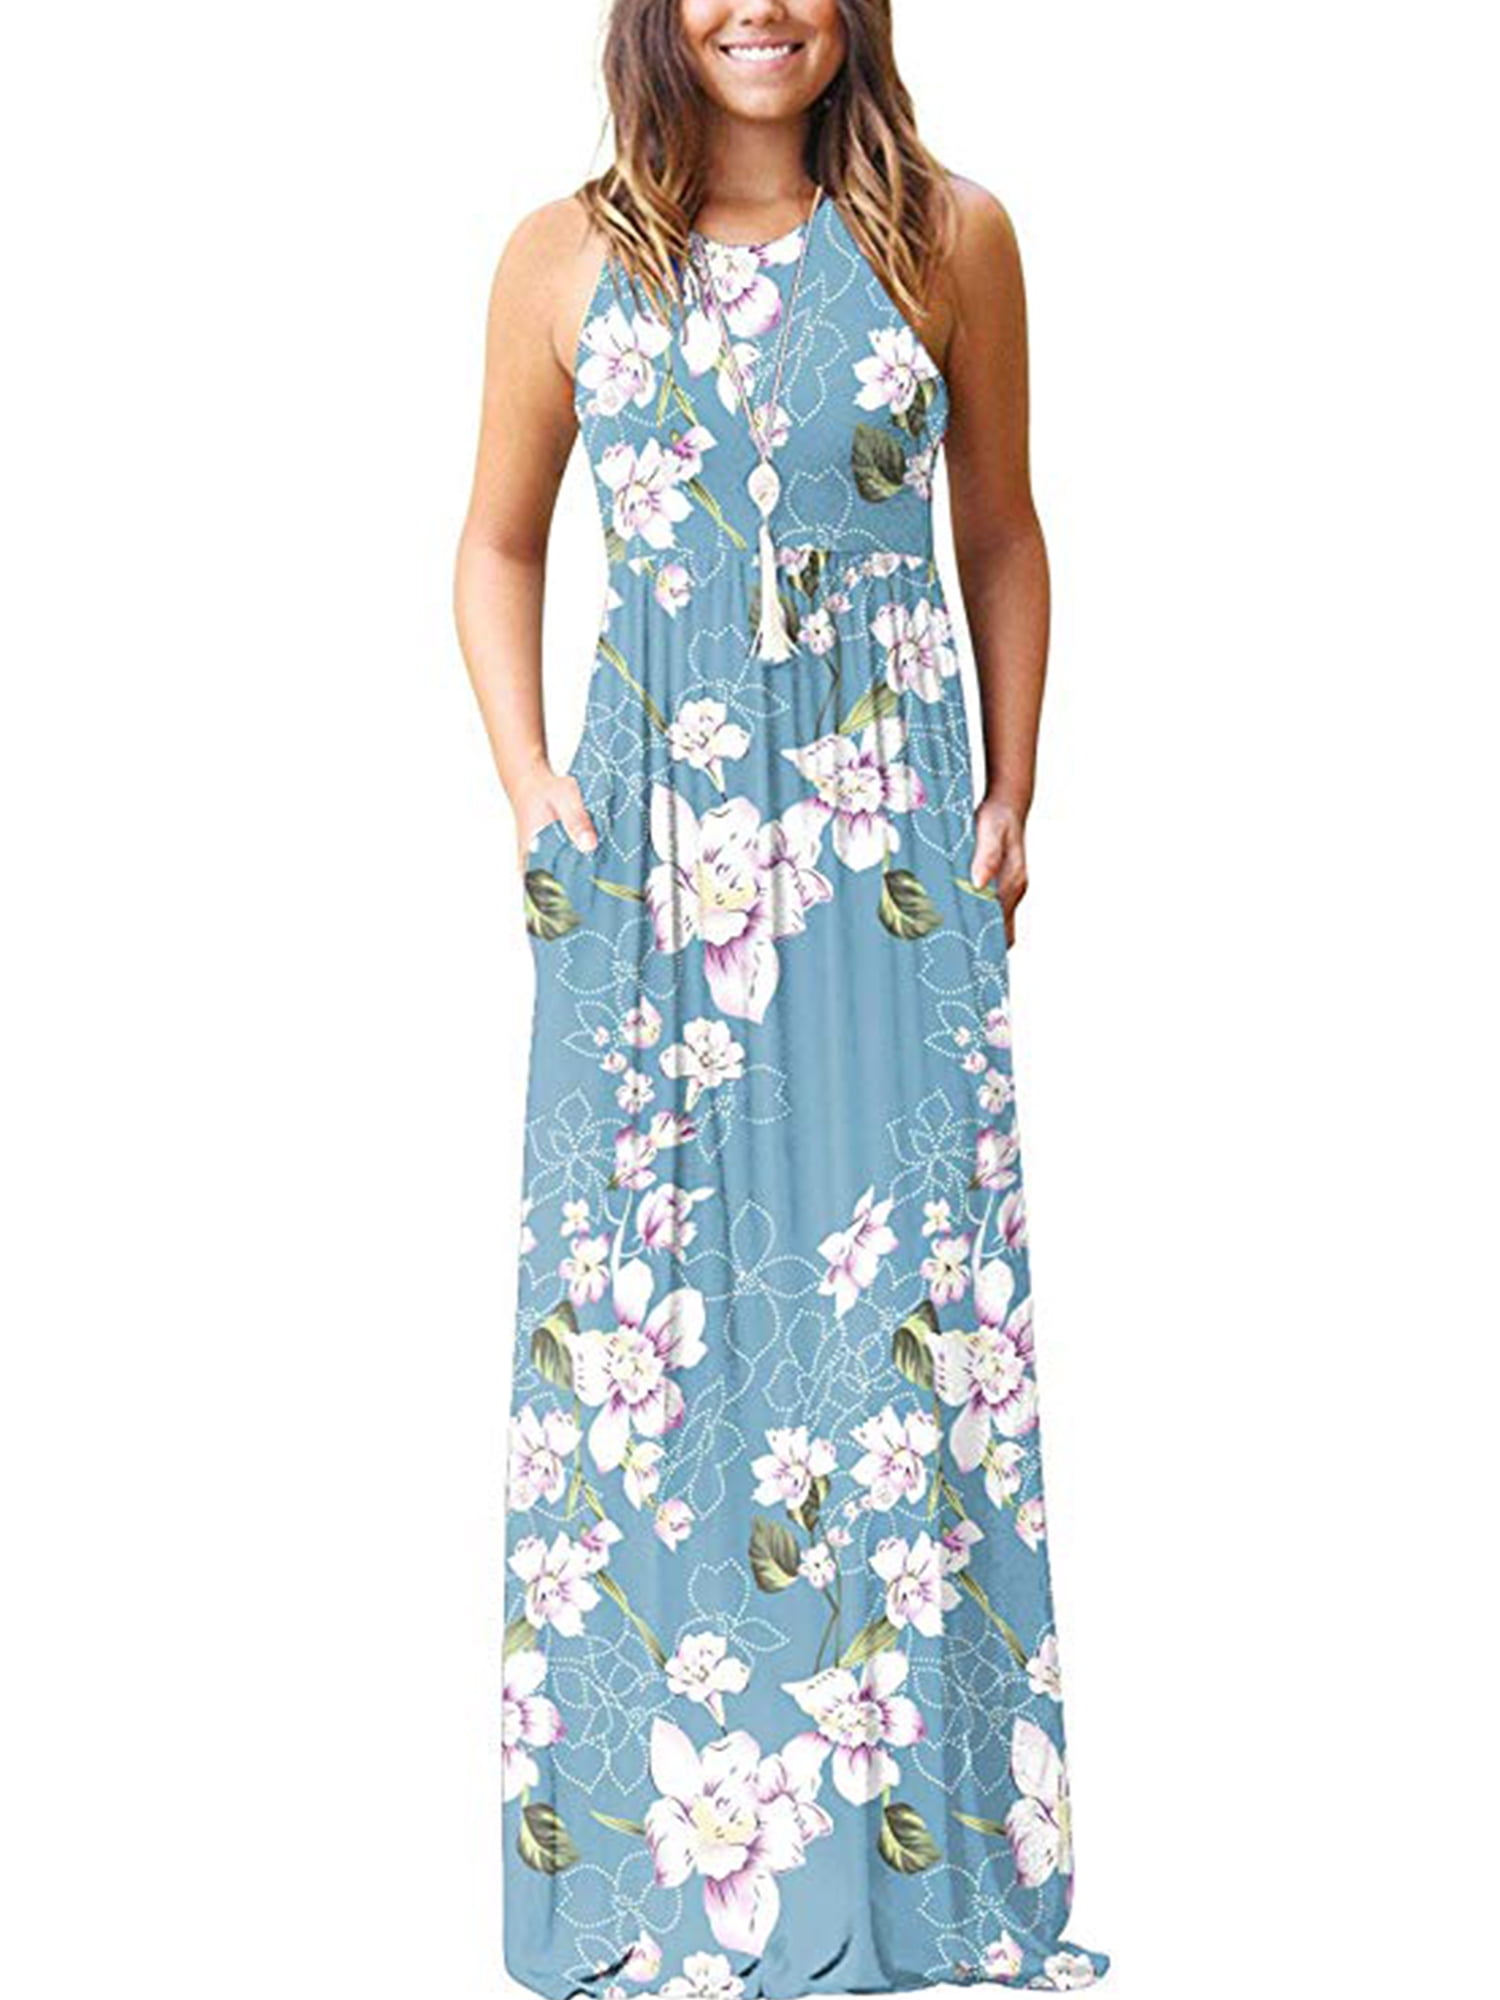 Women Ladies Boho Floral Turn-Down Collar Loose Casual Maxi Beach Dress Sundress